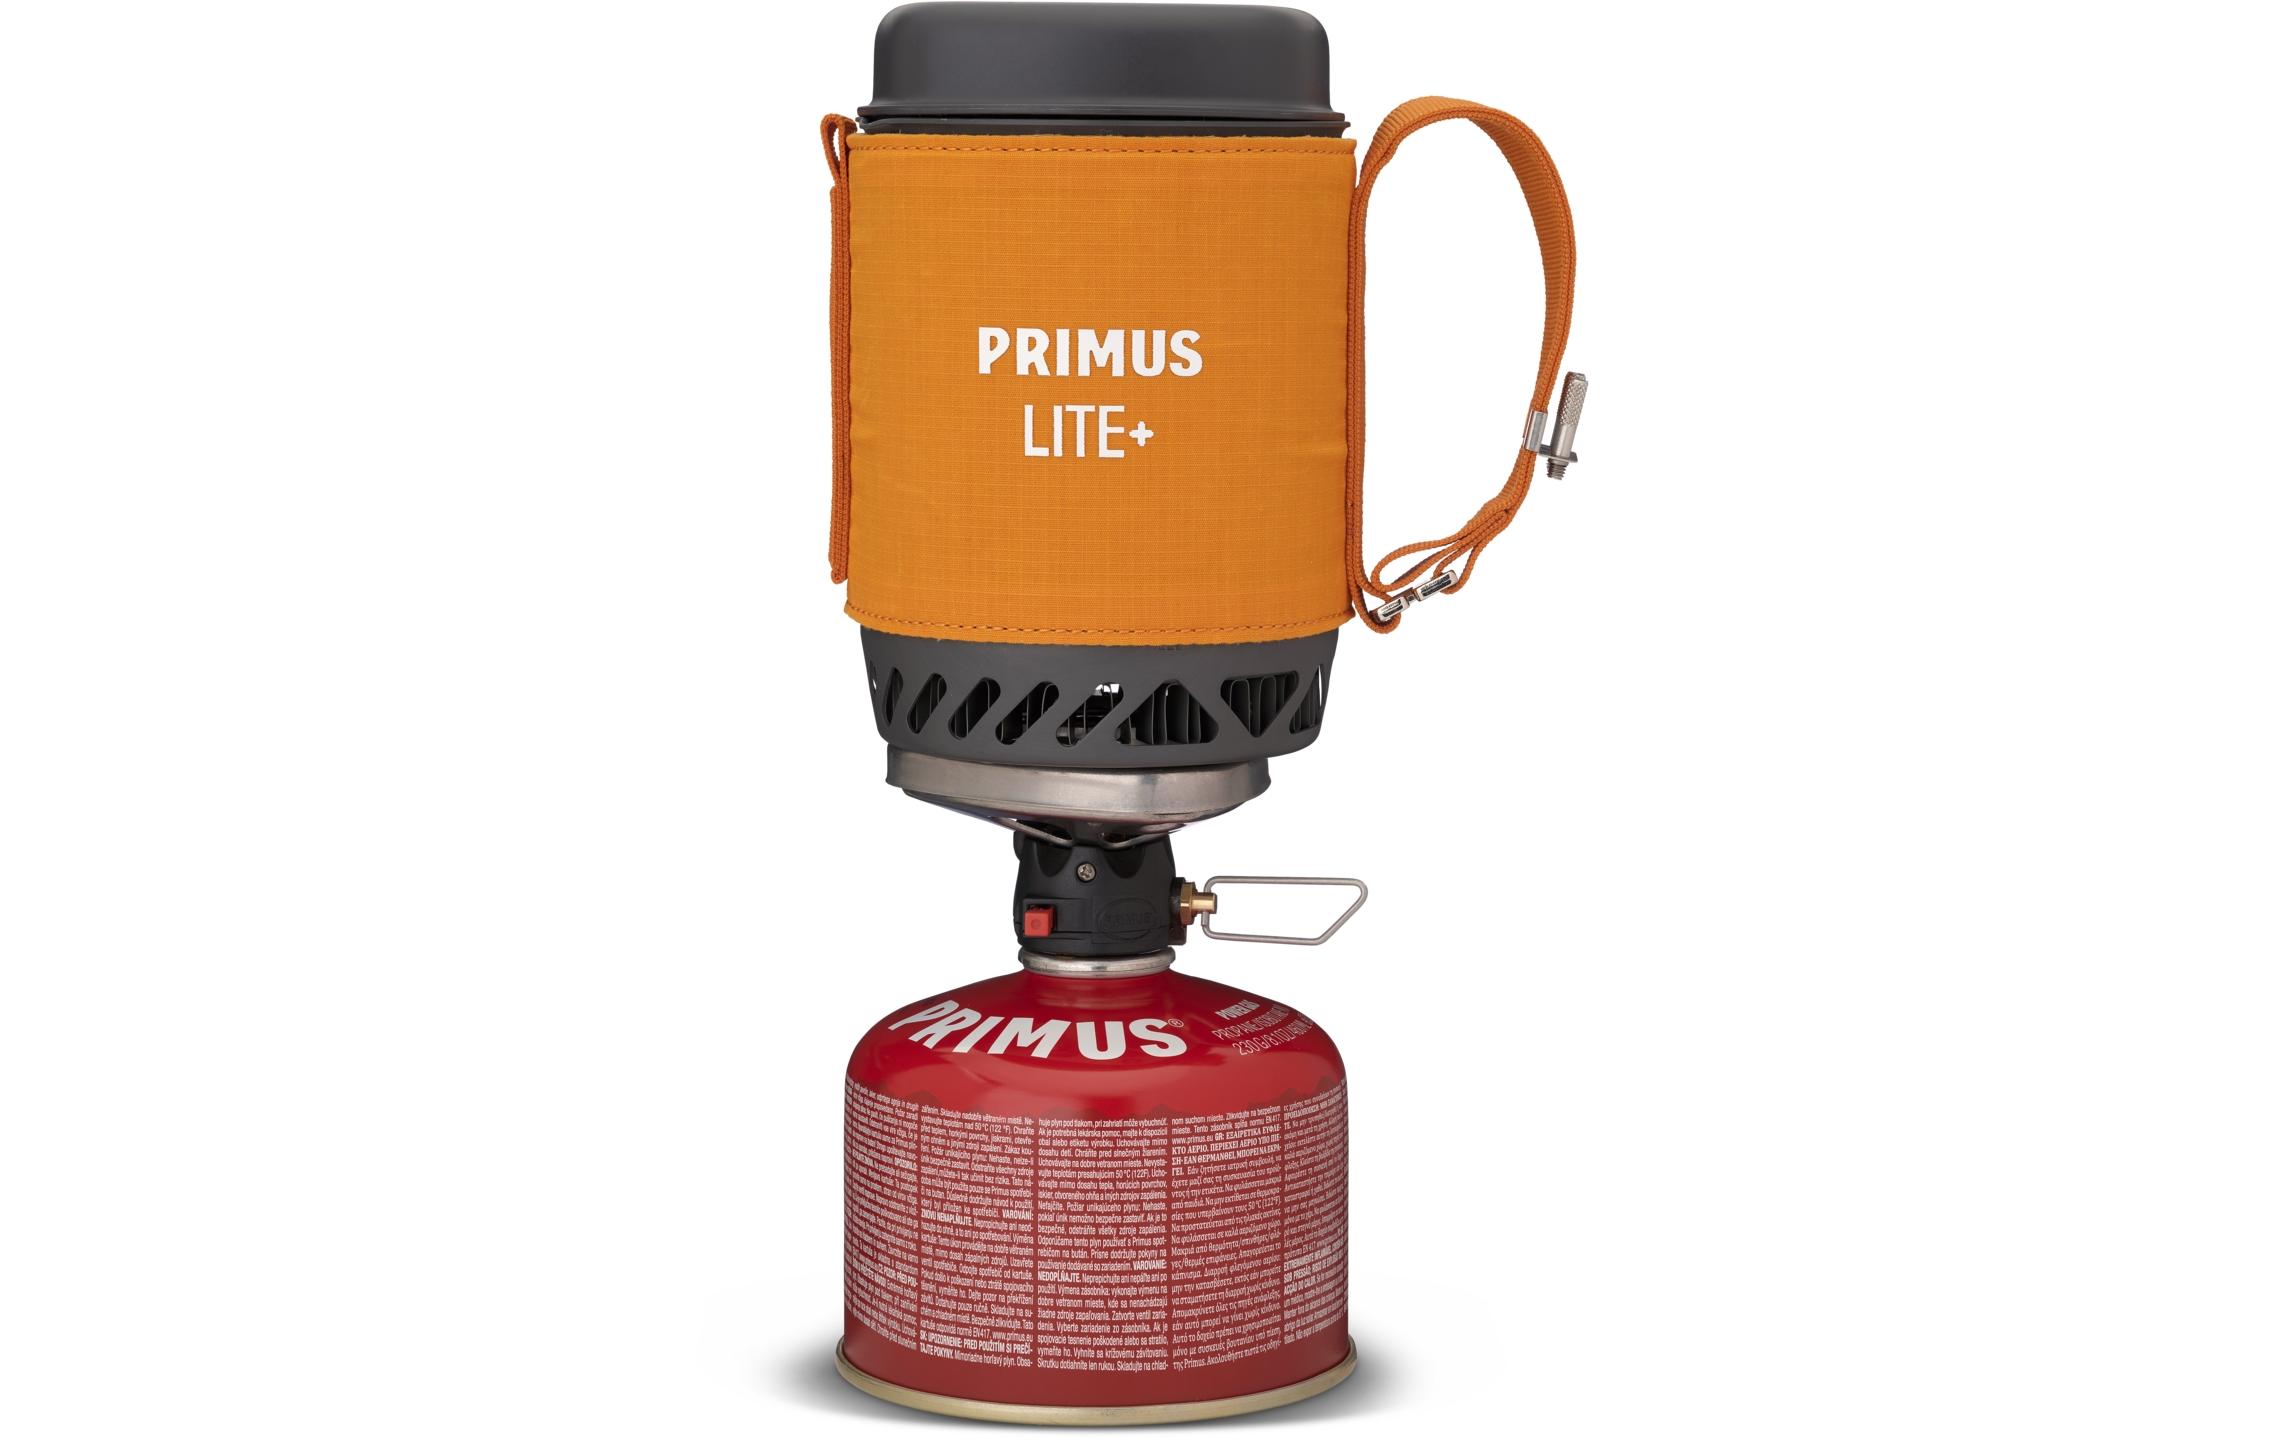 Primus Kochersystem Lite Plus Stove System Orange